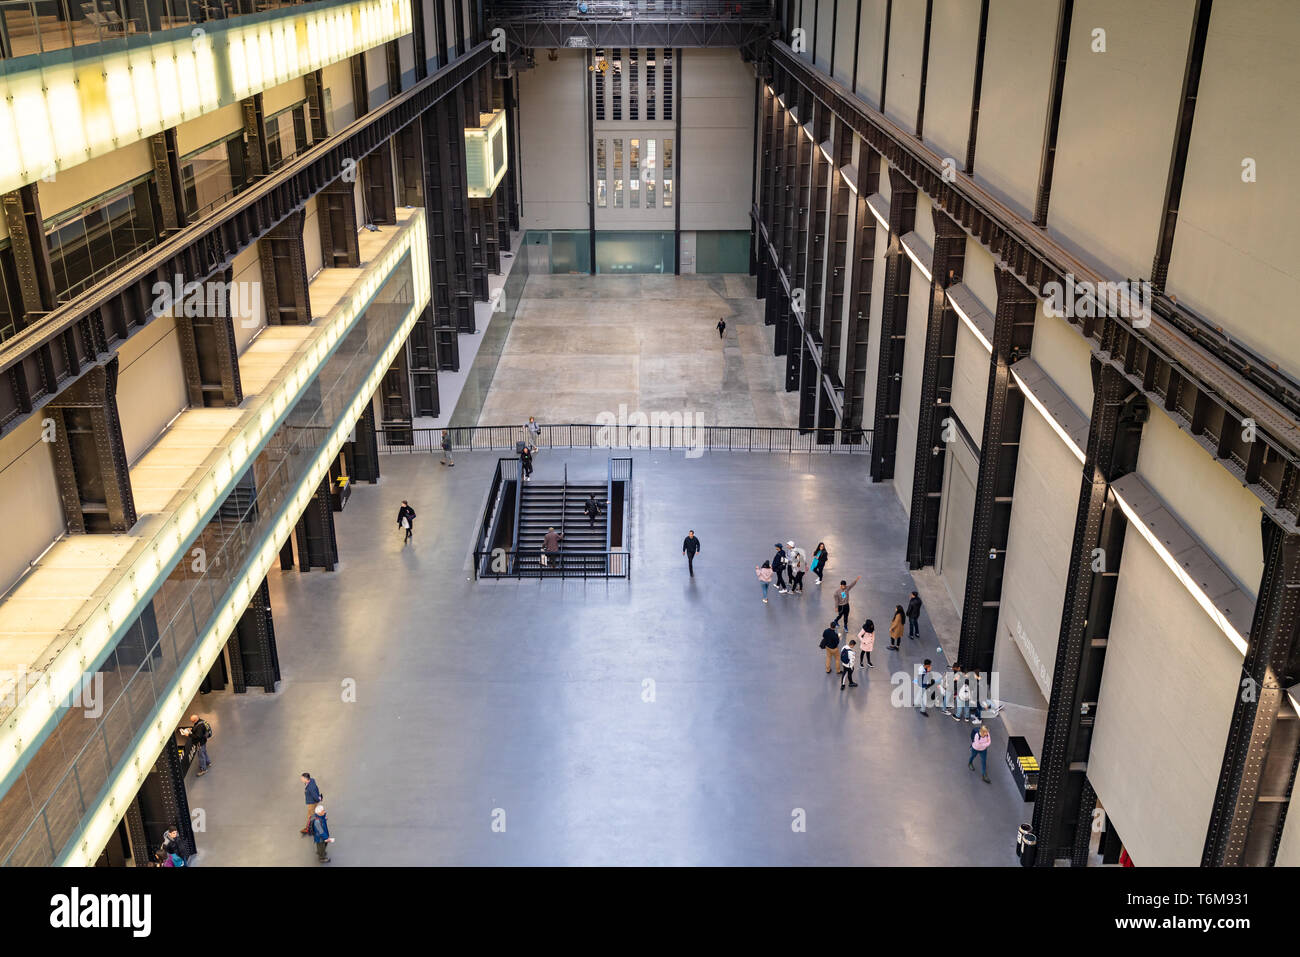 LONDON, UK - APRIL 1, 2019: People walking in interior of Tate Modern  Turbine Hall in London Stock Photo - Alamy